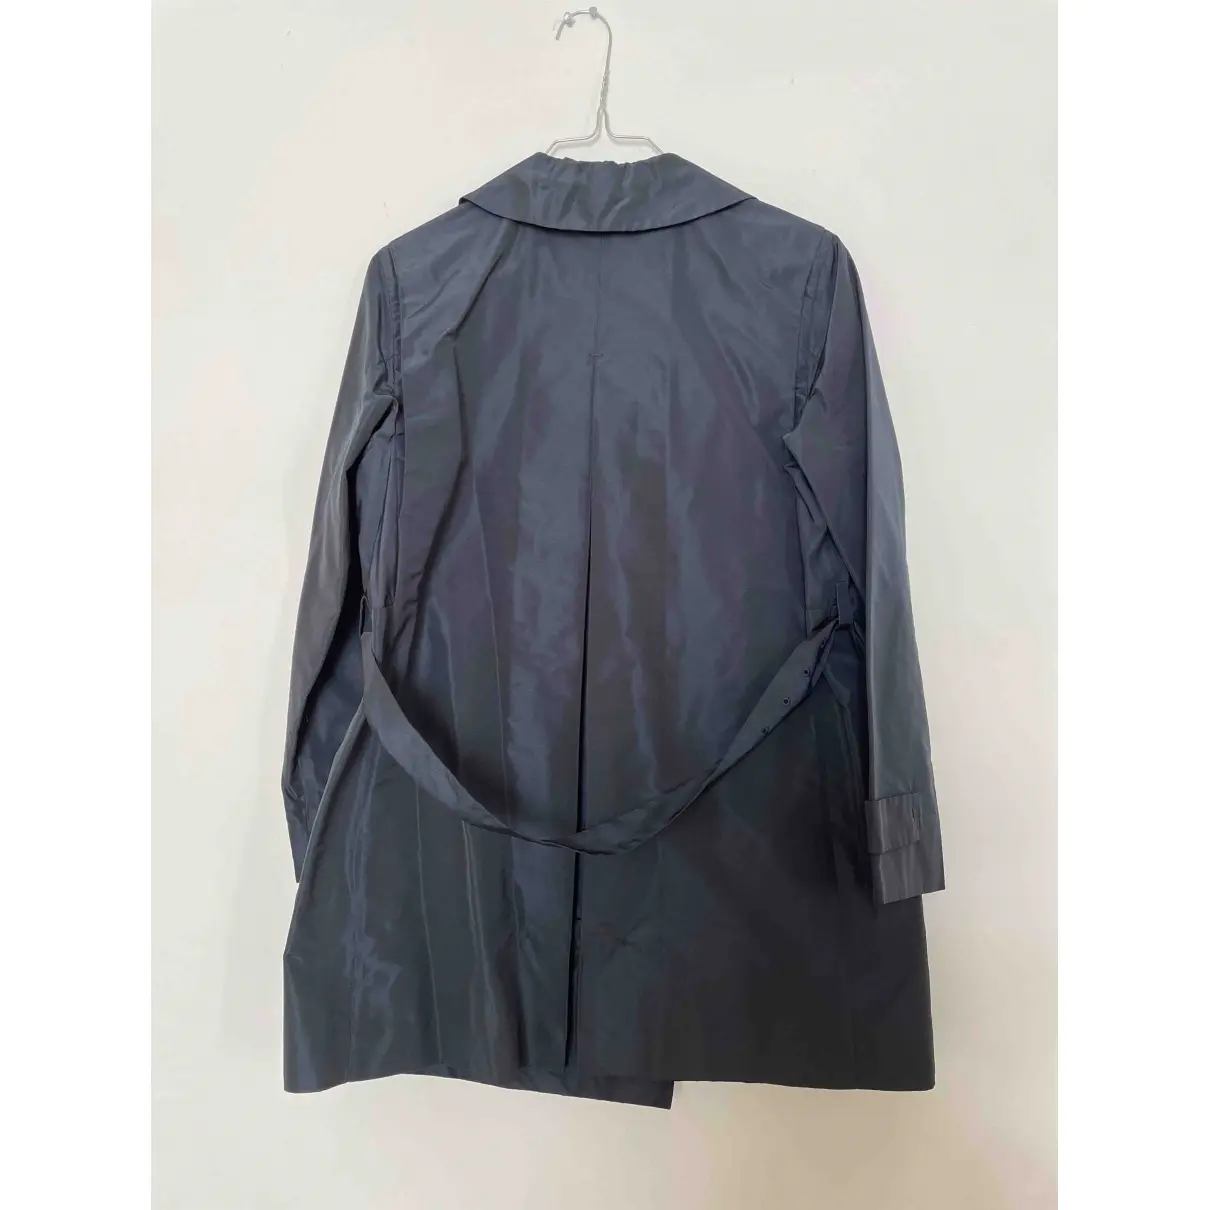 Buy Miu Miu Trench coat online